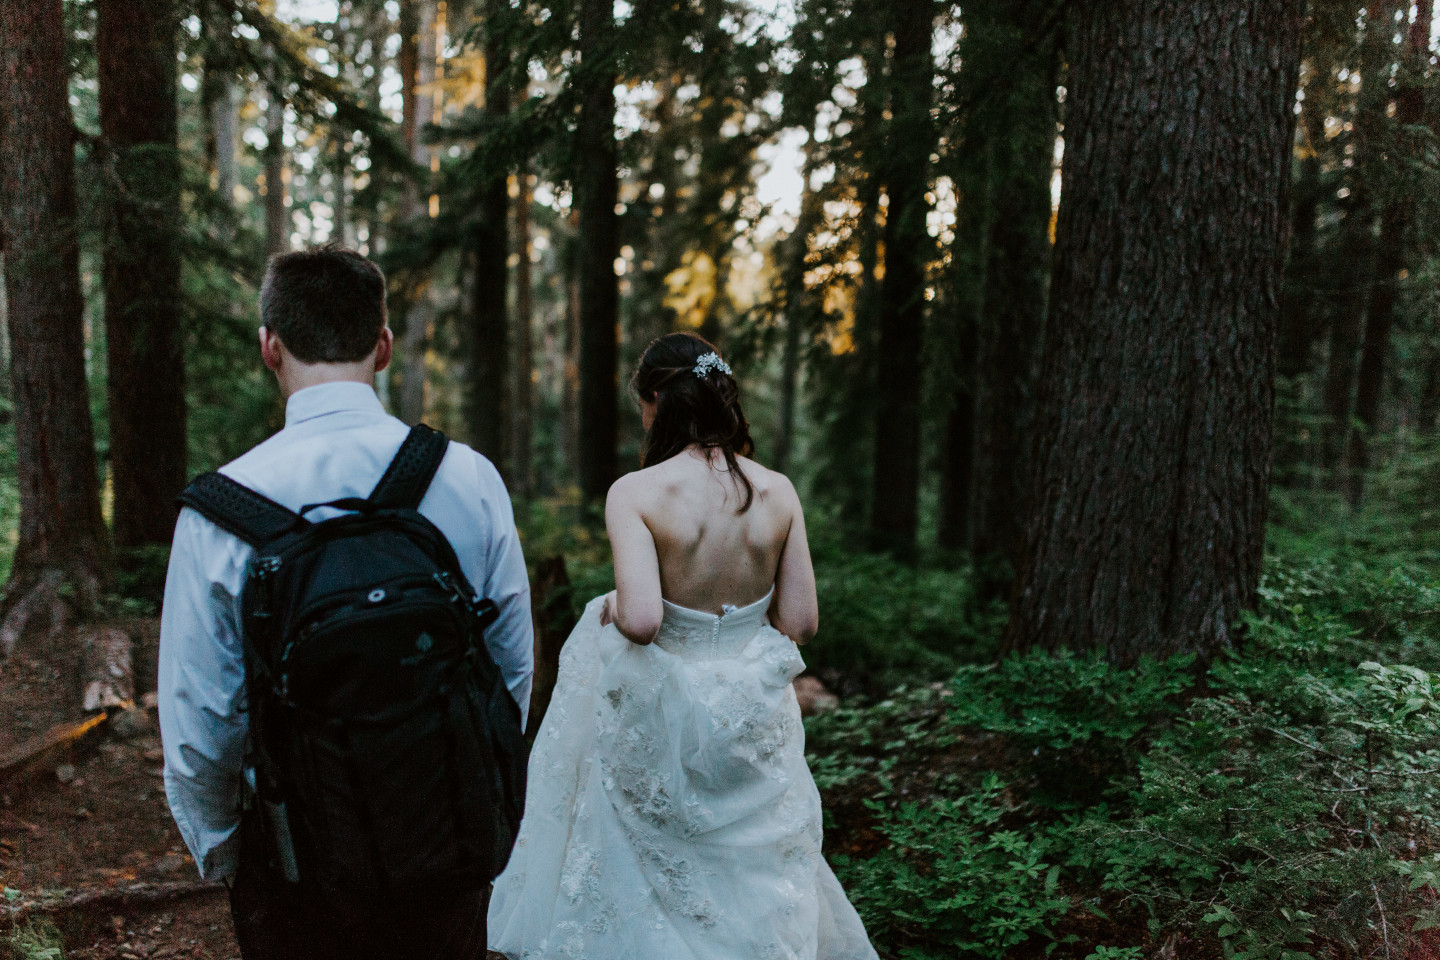 Moira and Ryan adventuring through the woods. Adventure elopement wedding shoot by Sienna Plus Josh.